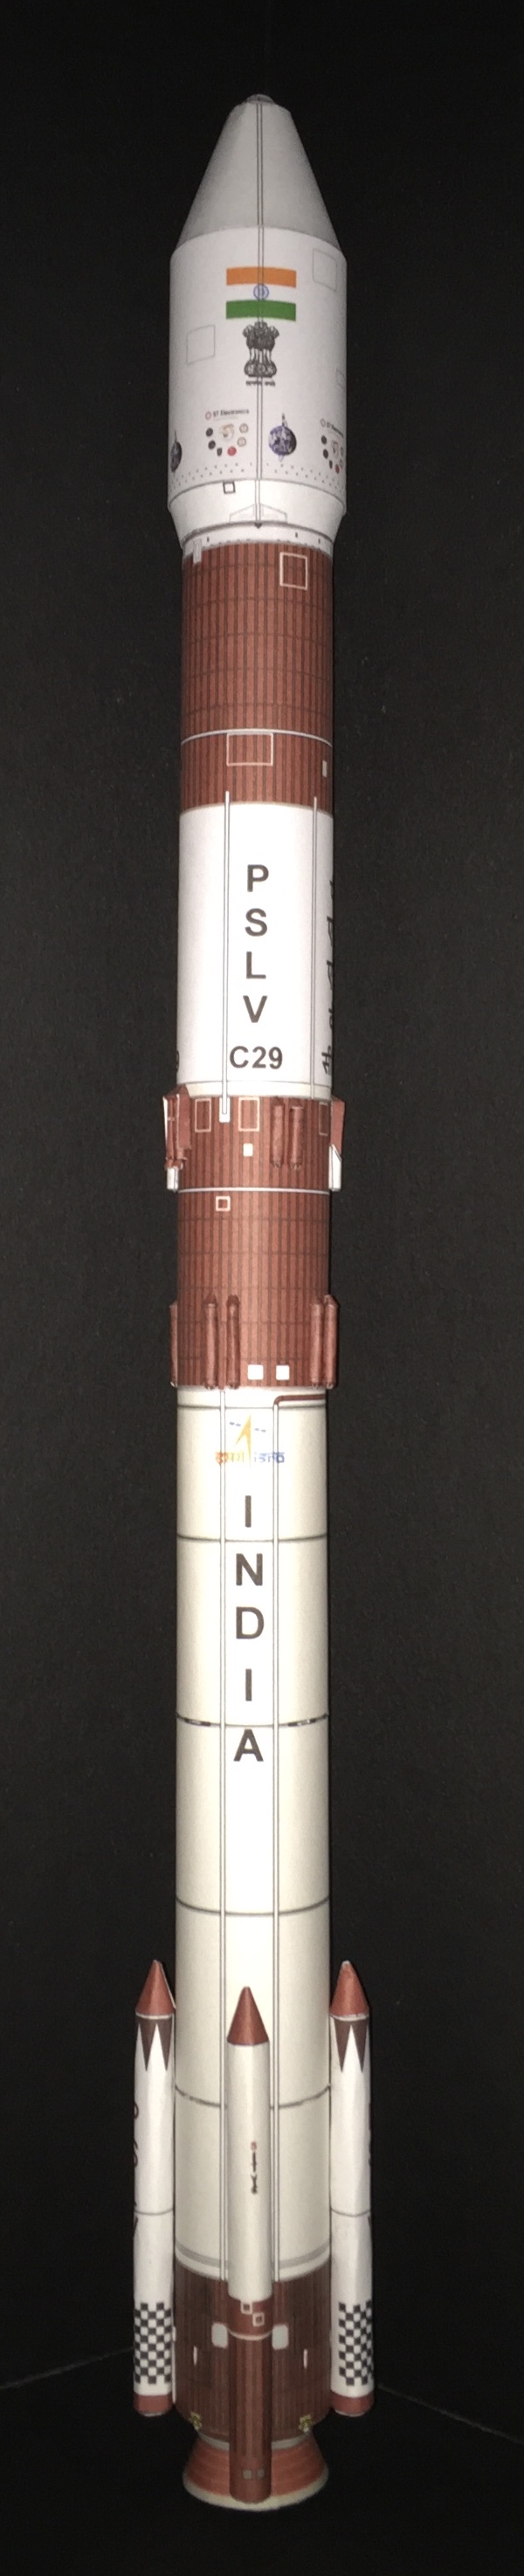 PSLV C29-image